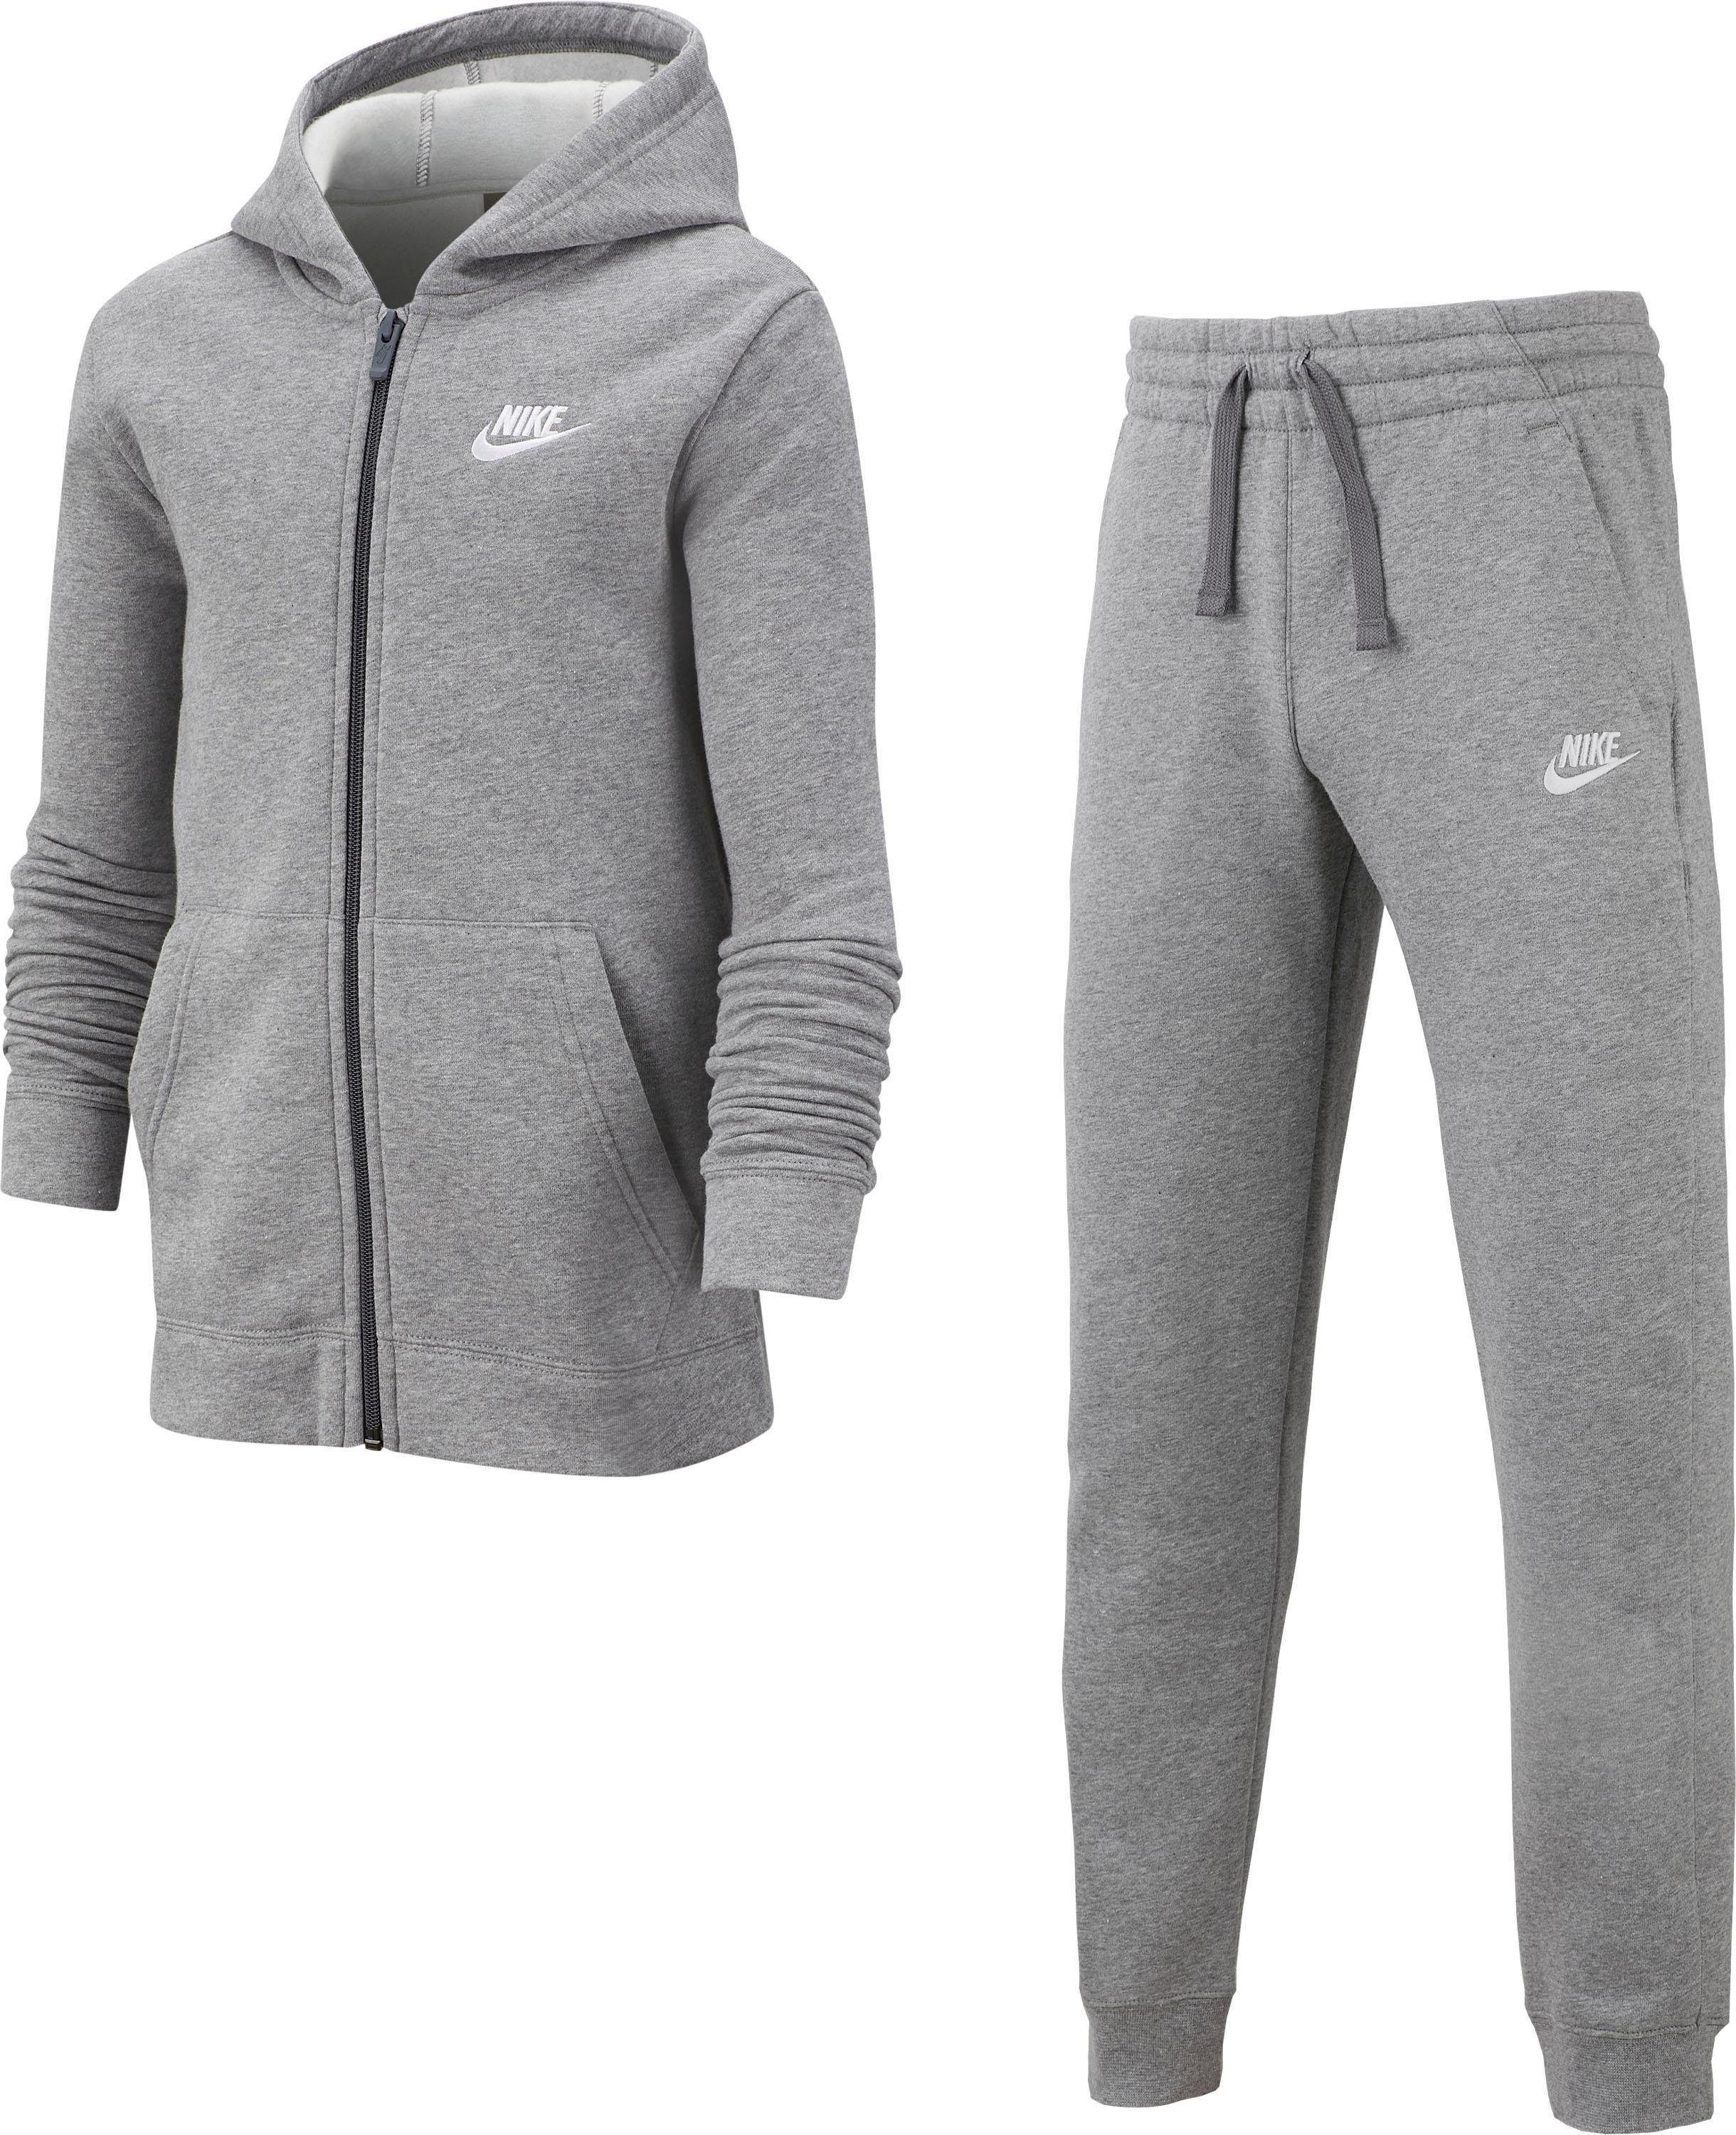 (Set, Kinder CORE NSW Sportswear Jogginganzug 2-tlg), Nike für grau-meliert